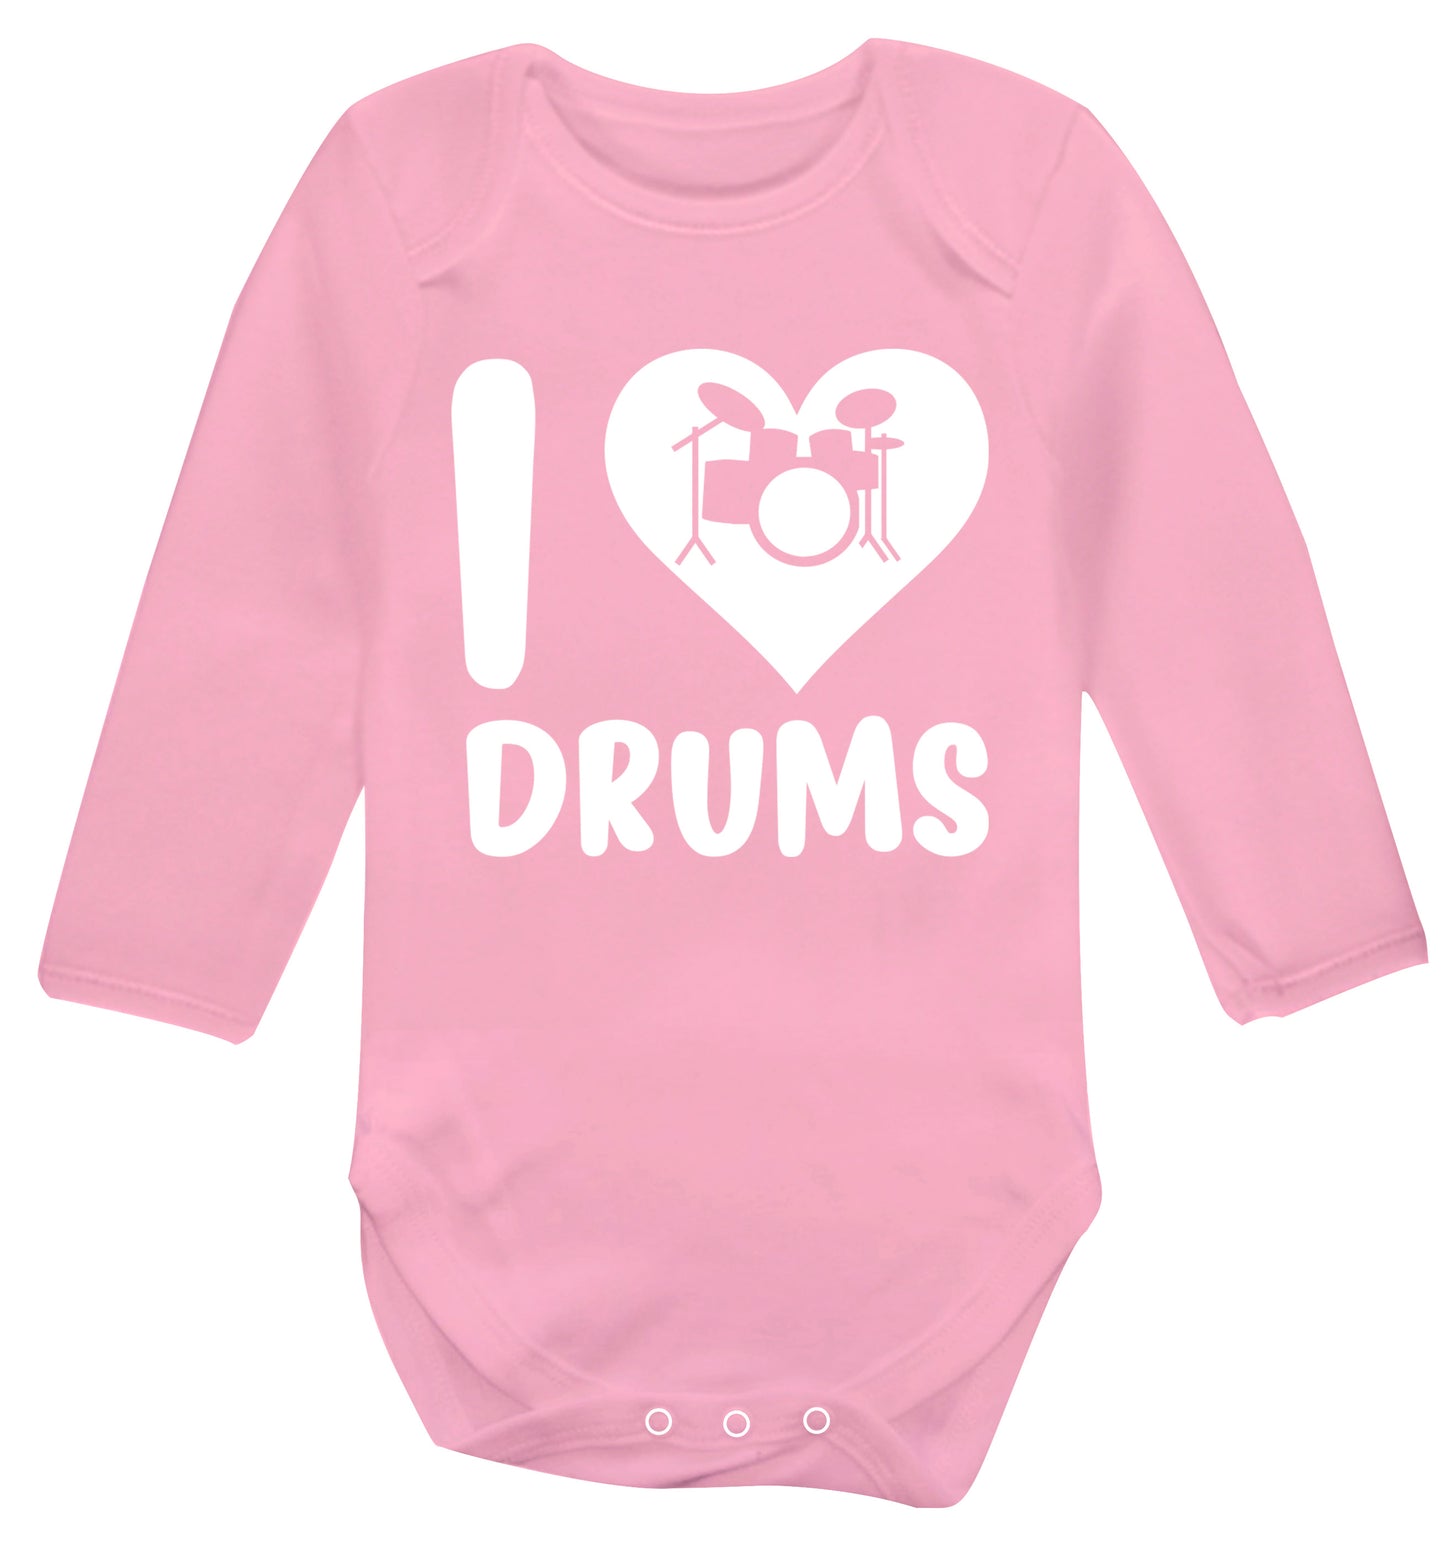 I love drums Baby Vest long sleeved pale pink 6-12 months